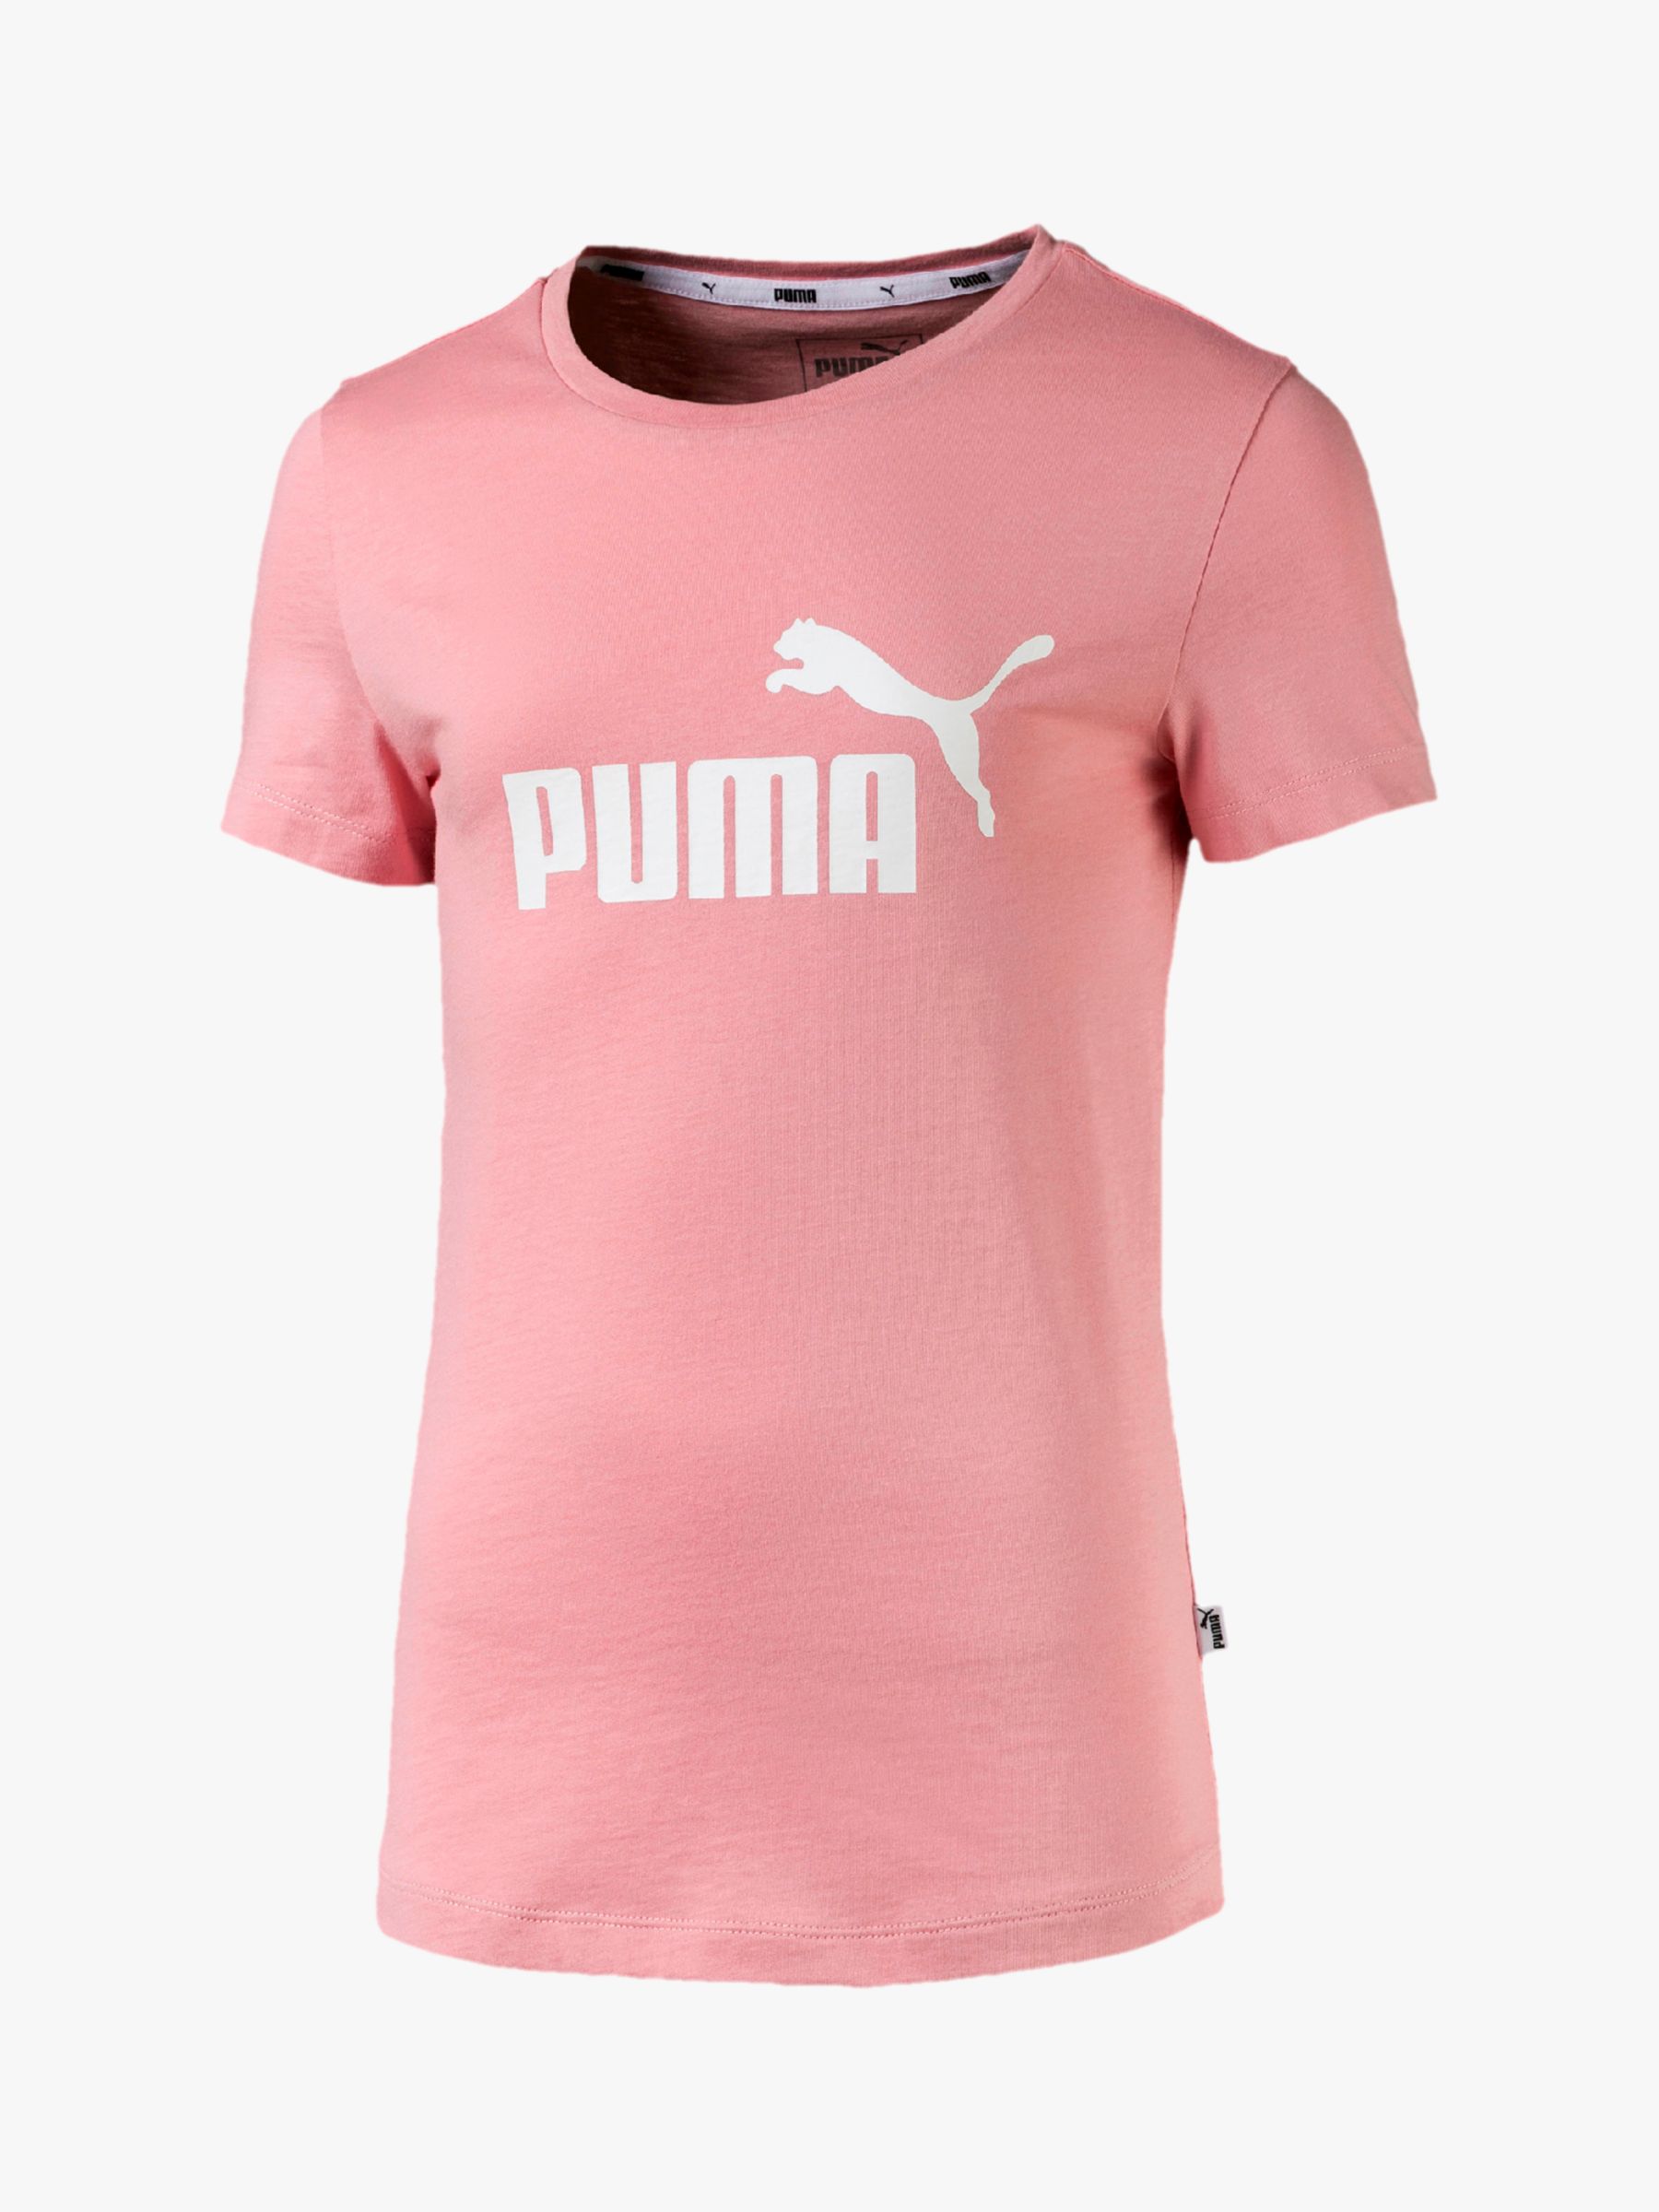 puma girls shirt